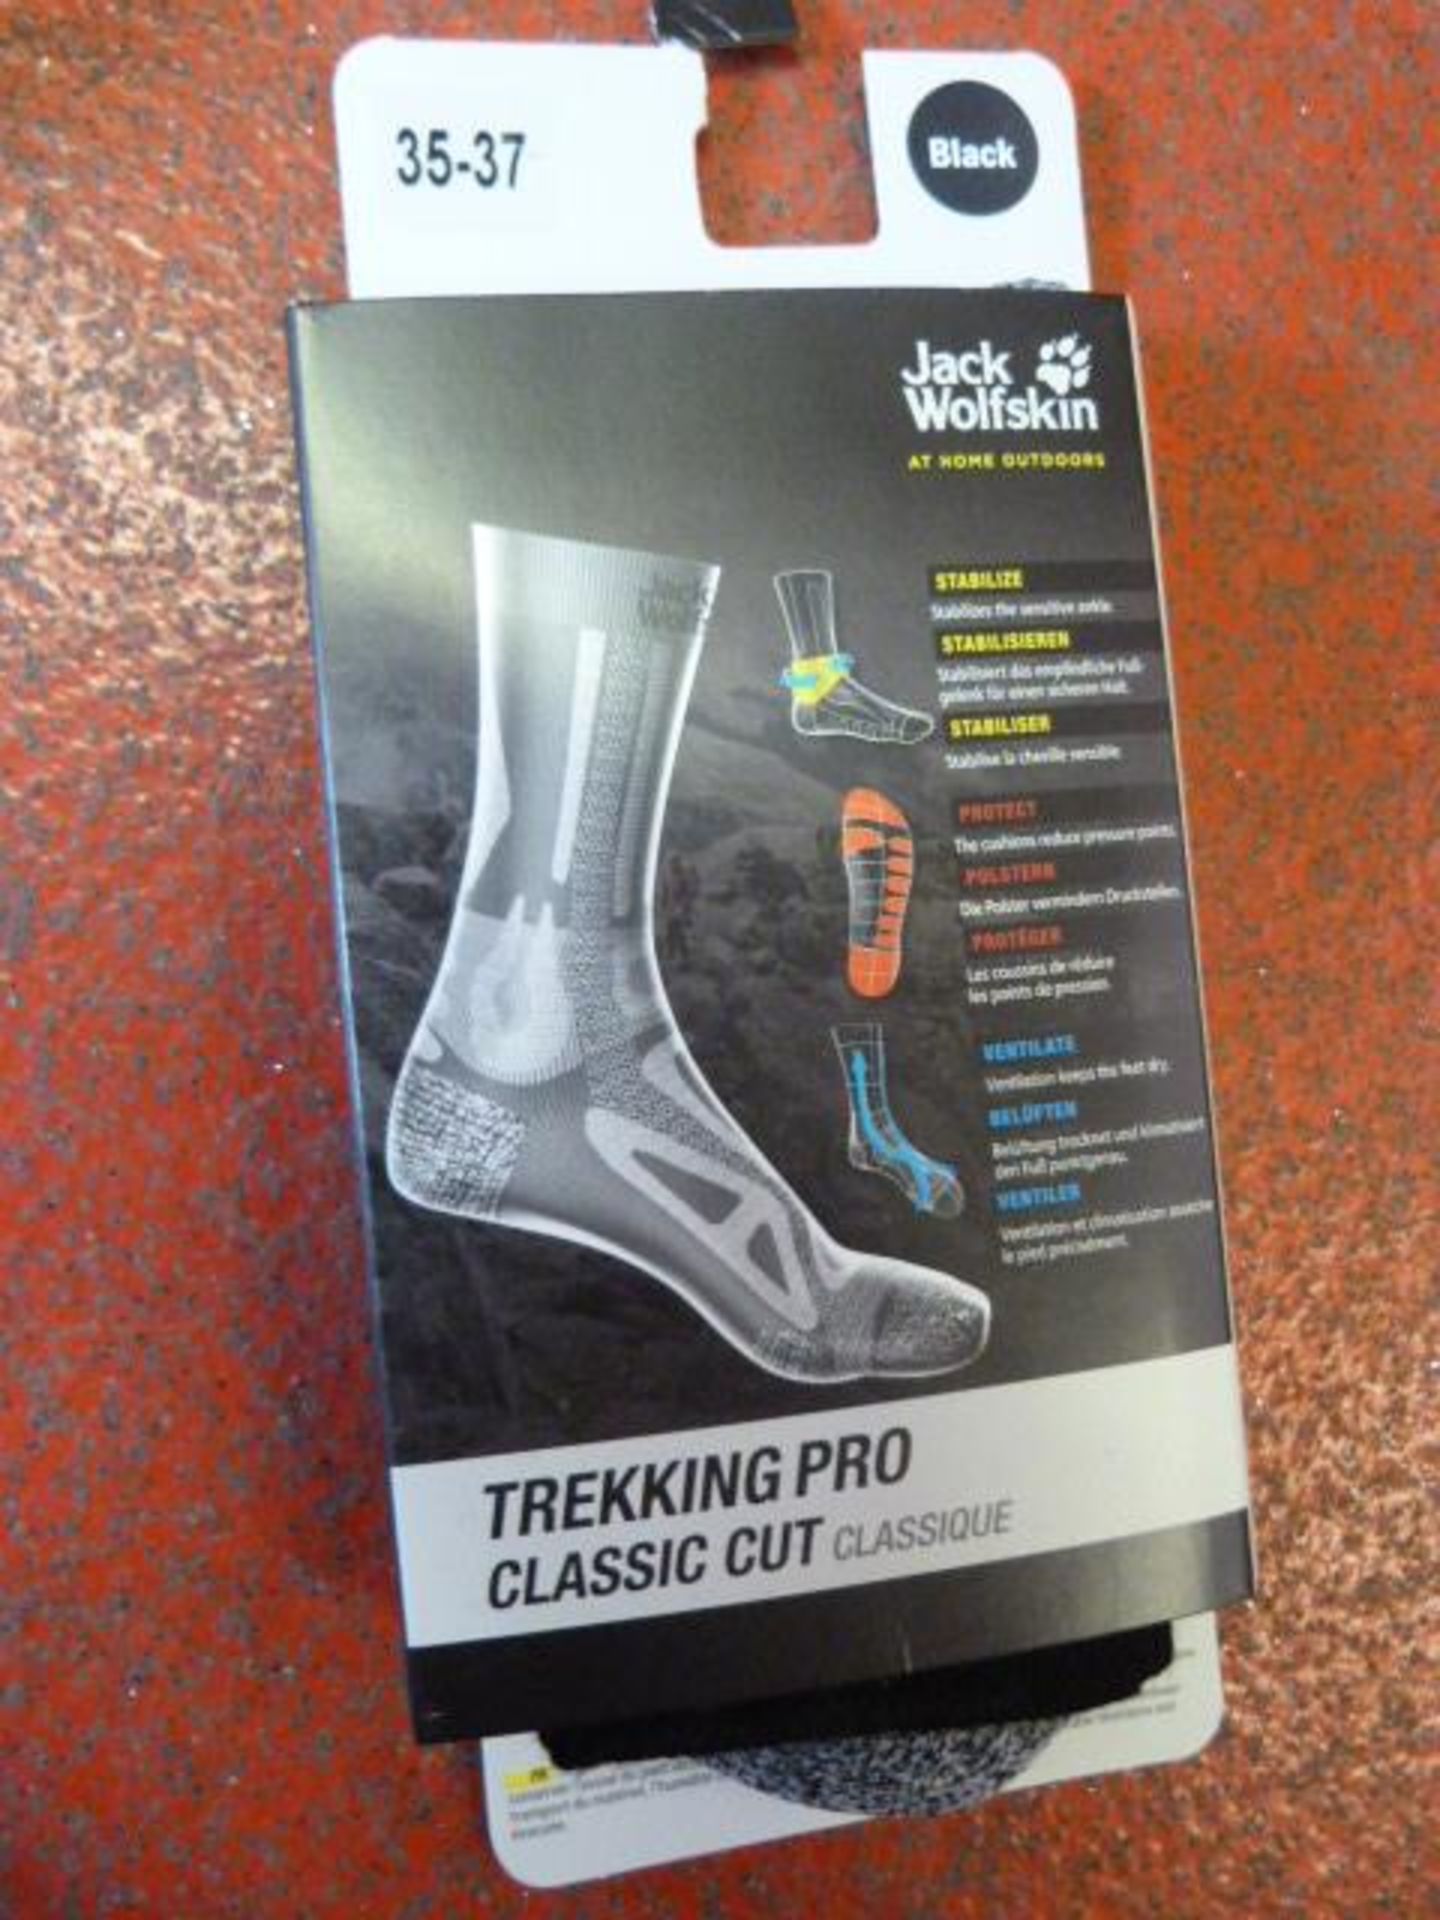 *Trekking Pro Classic Cut Socks in Black Size: 35-